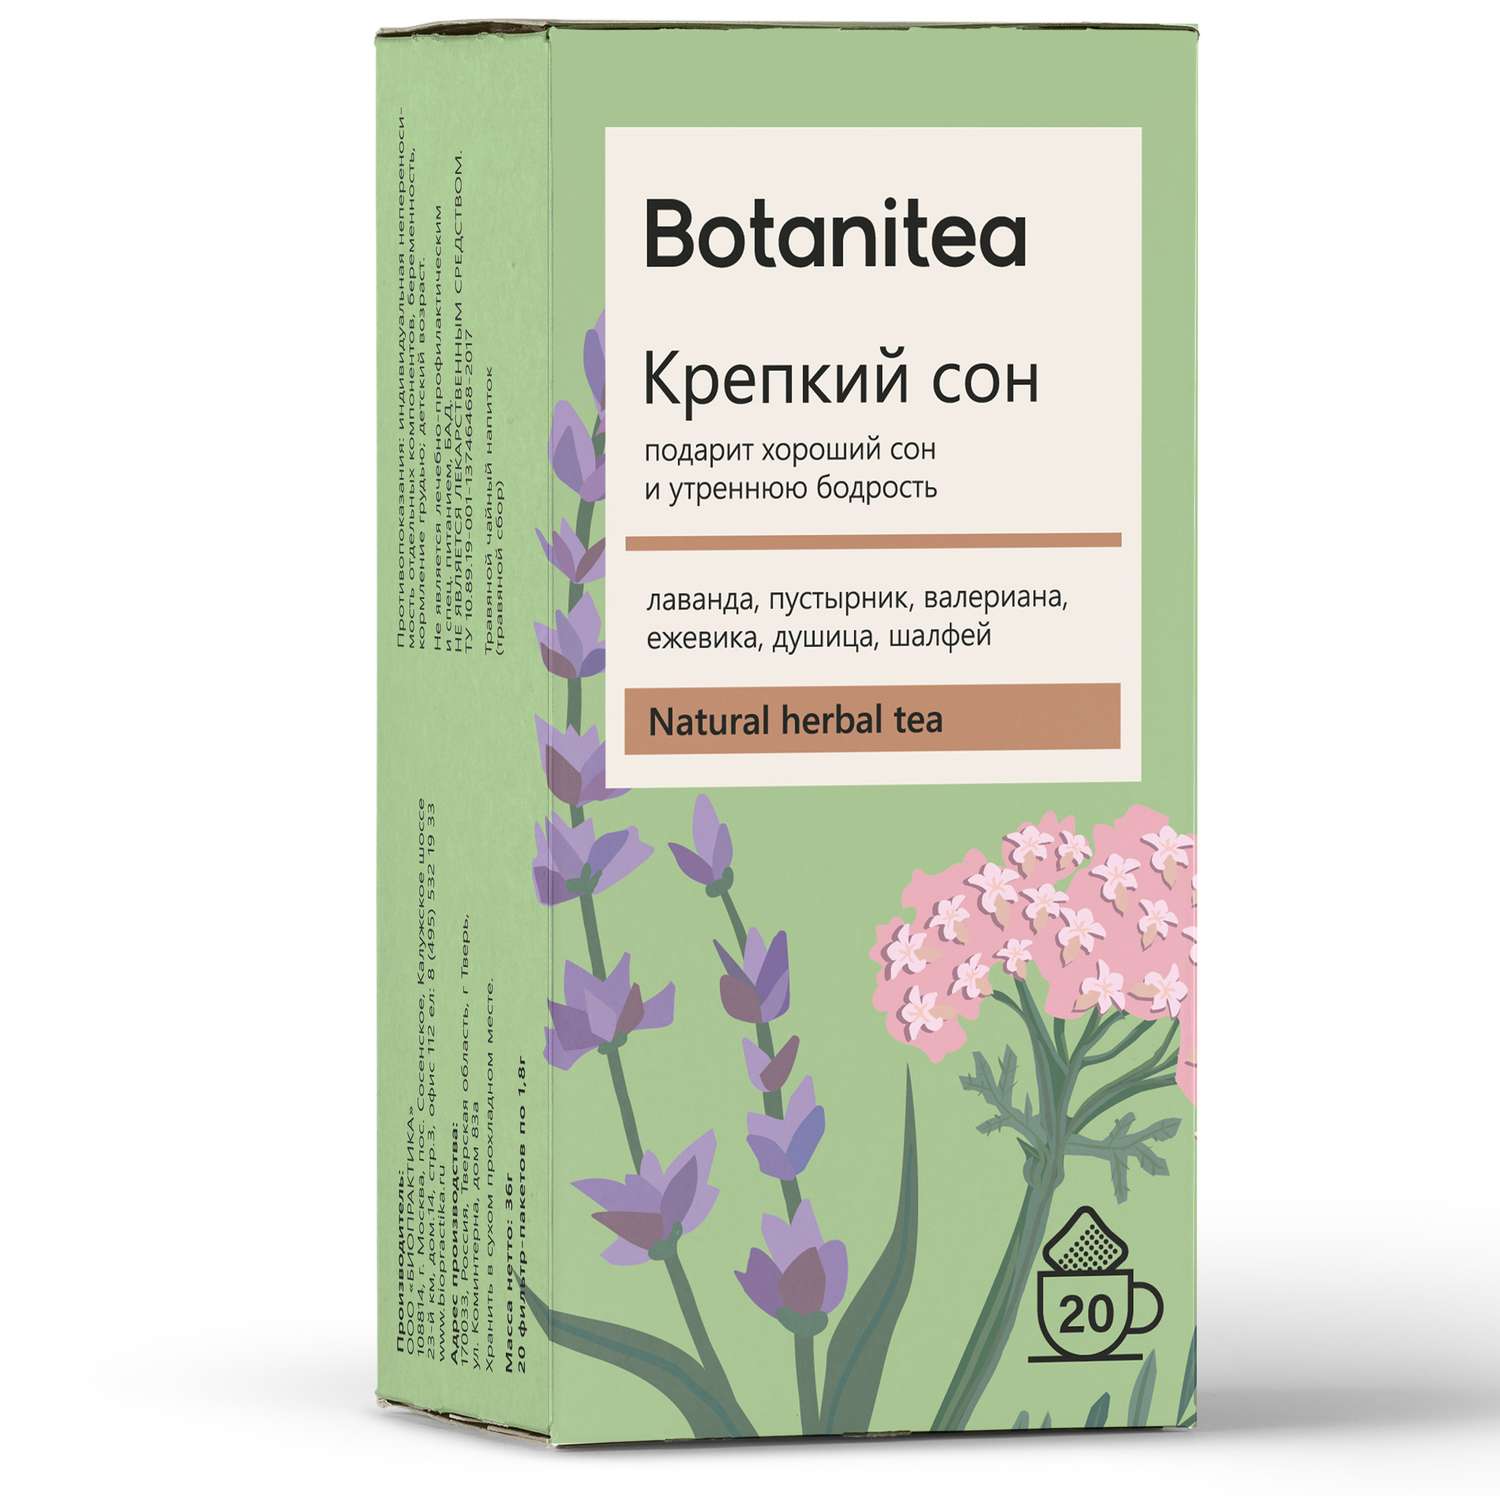 Botanitea. Травяной чай Биопрактика Biopractika botanitea сон. Botanitea крепкий сон. Трава для сна валериана чай. Биопрактика отзывы.